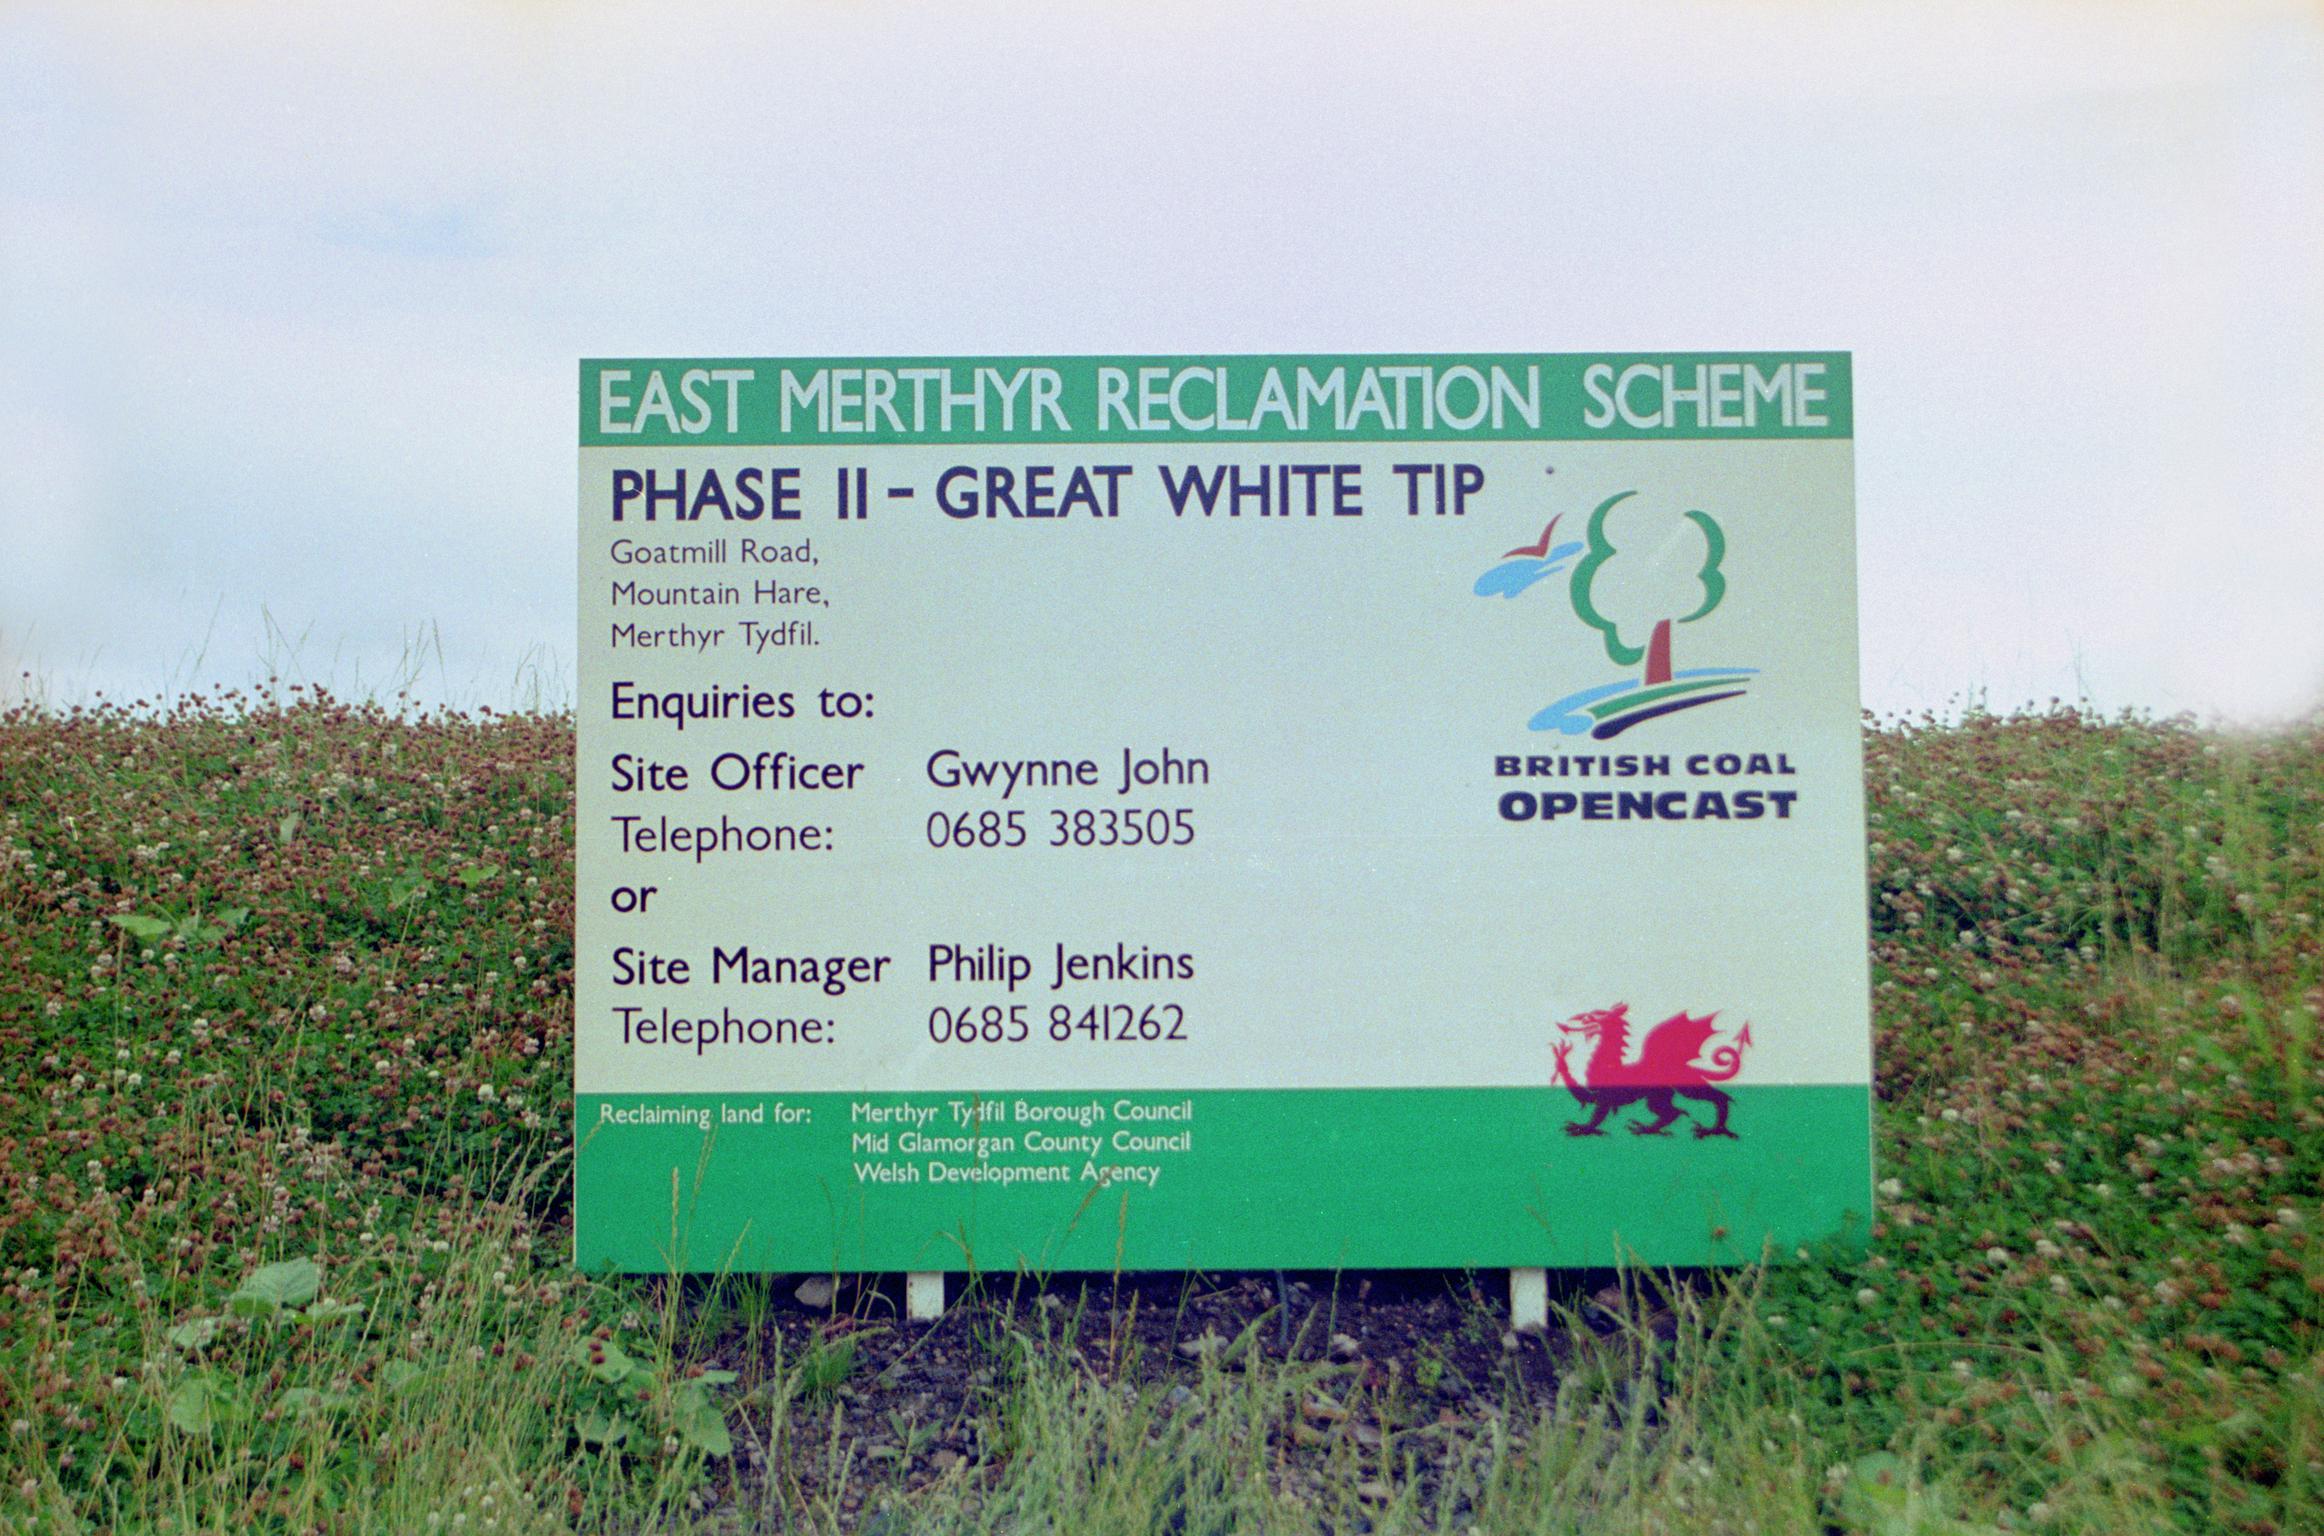 East Merthyr reclamation scheme, negative